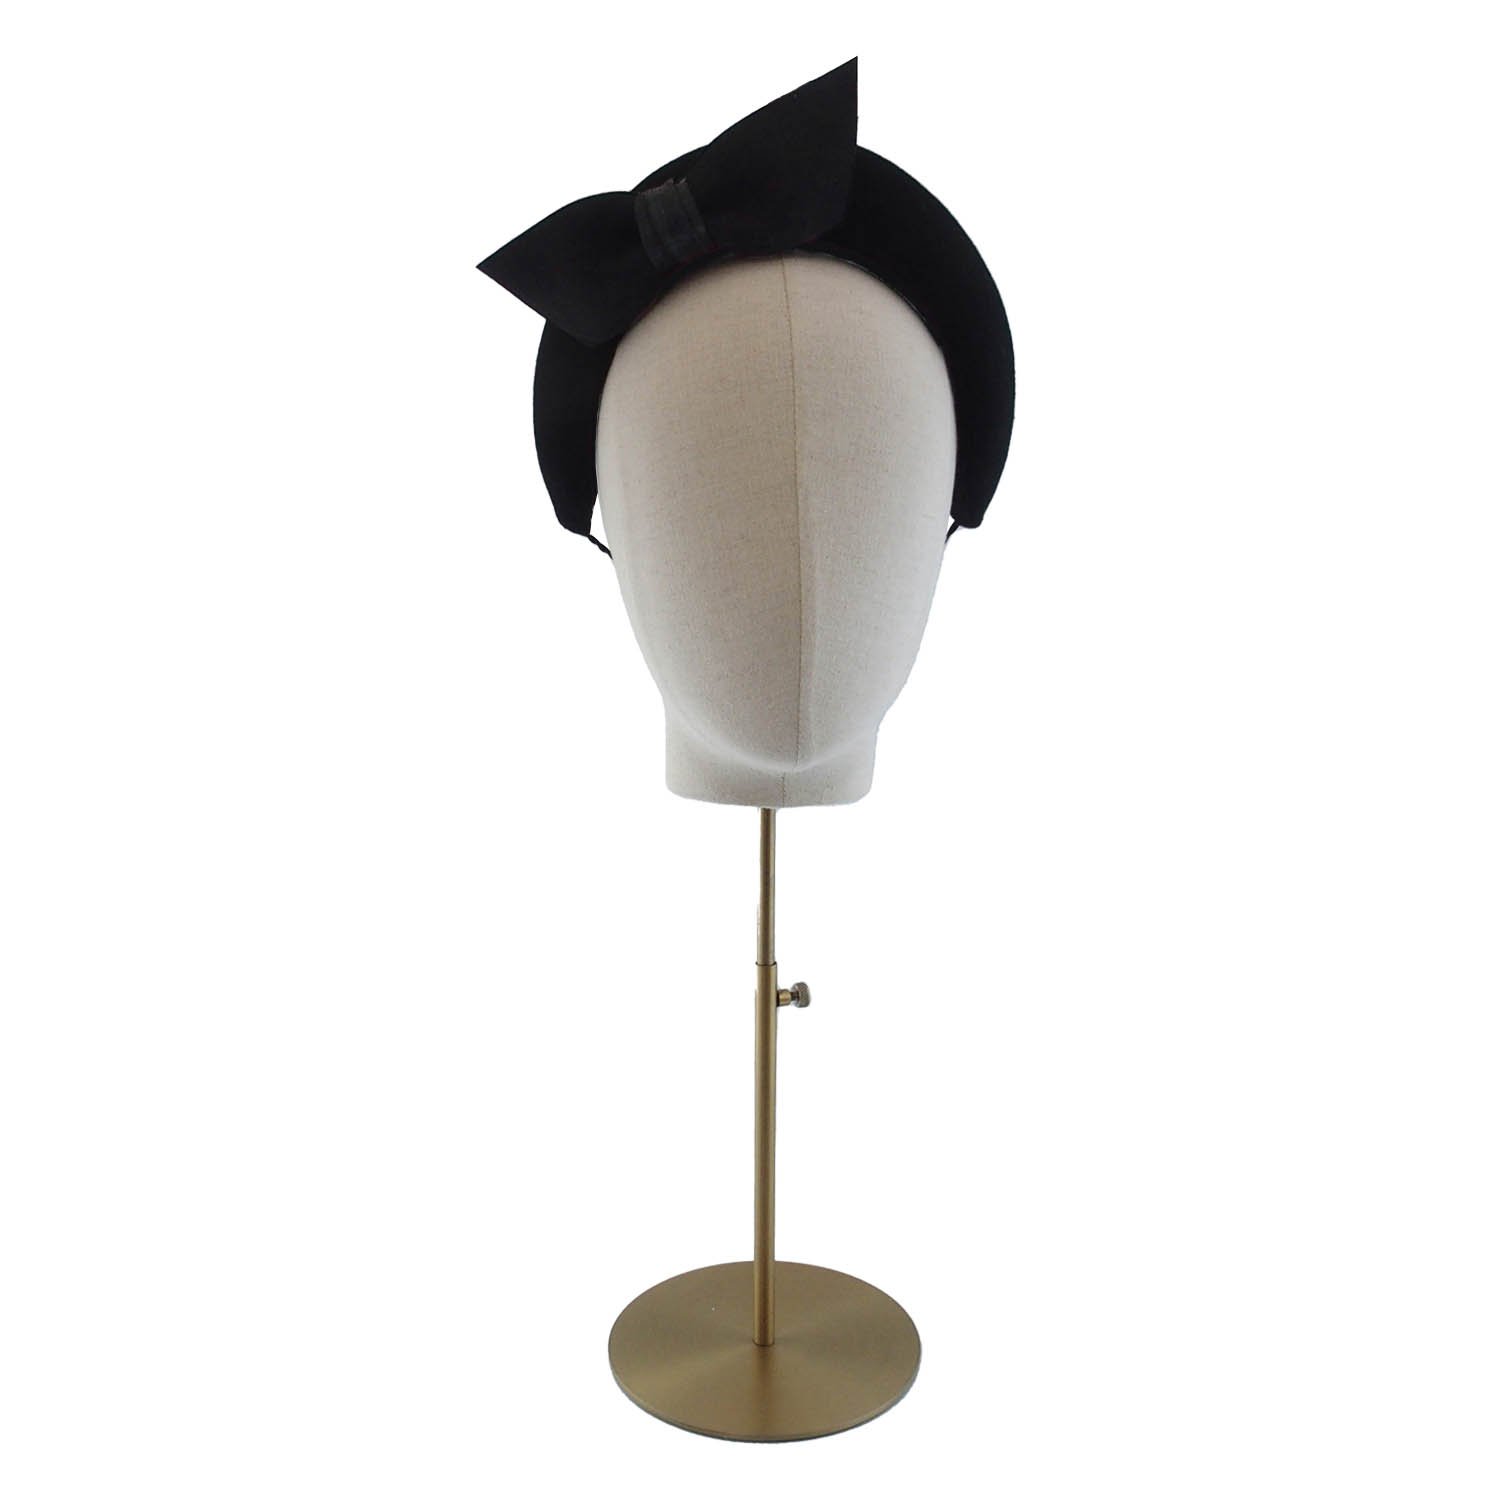 Bee Smith Millinery Sisley Bow Headband in Black.jpg